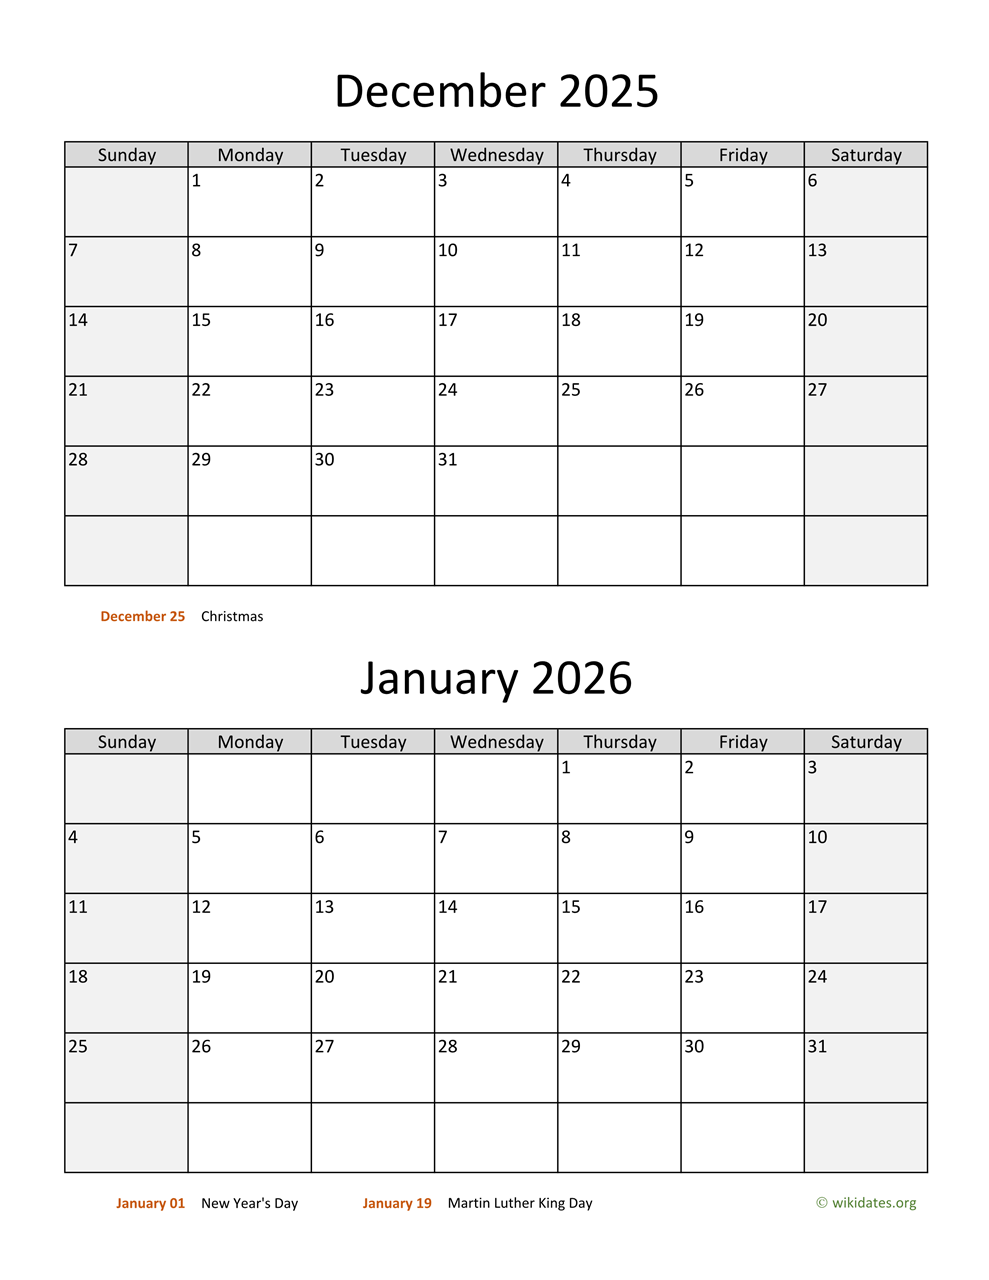 December 2025 and January 2026 Calendar  WikiDates.org